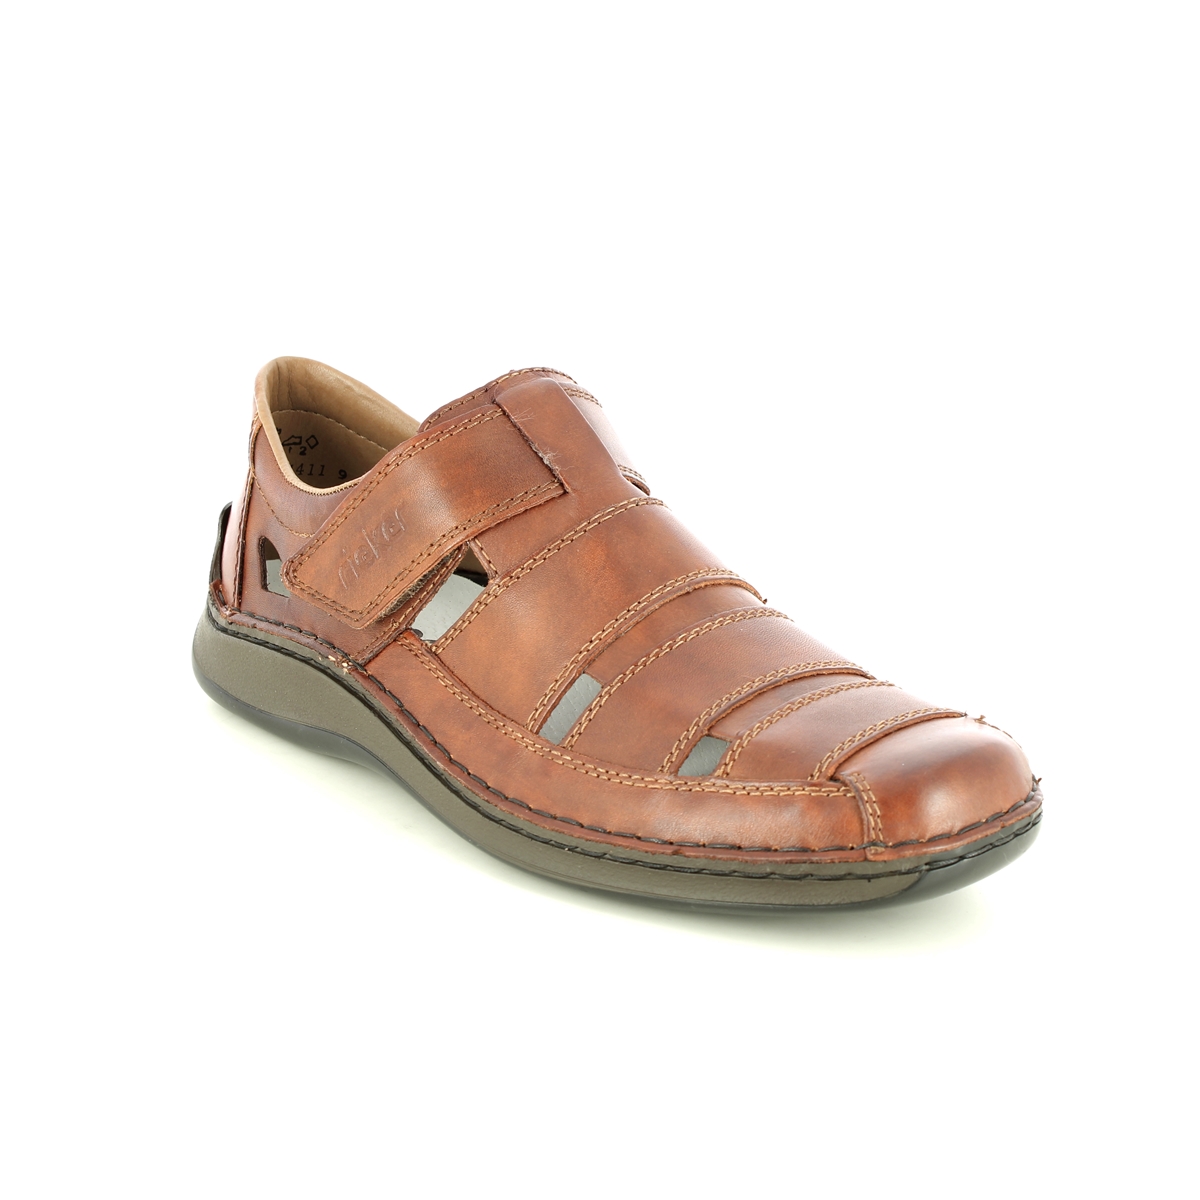 Rieker Tan Leather sandals